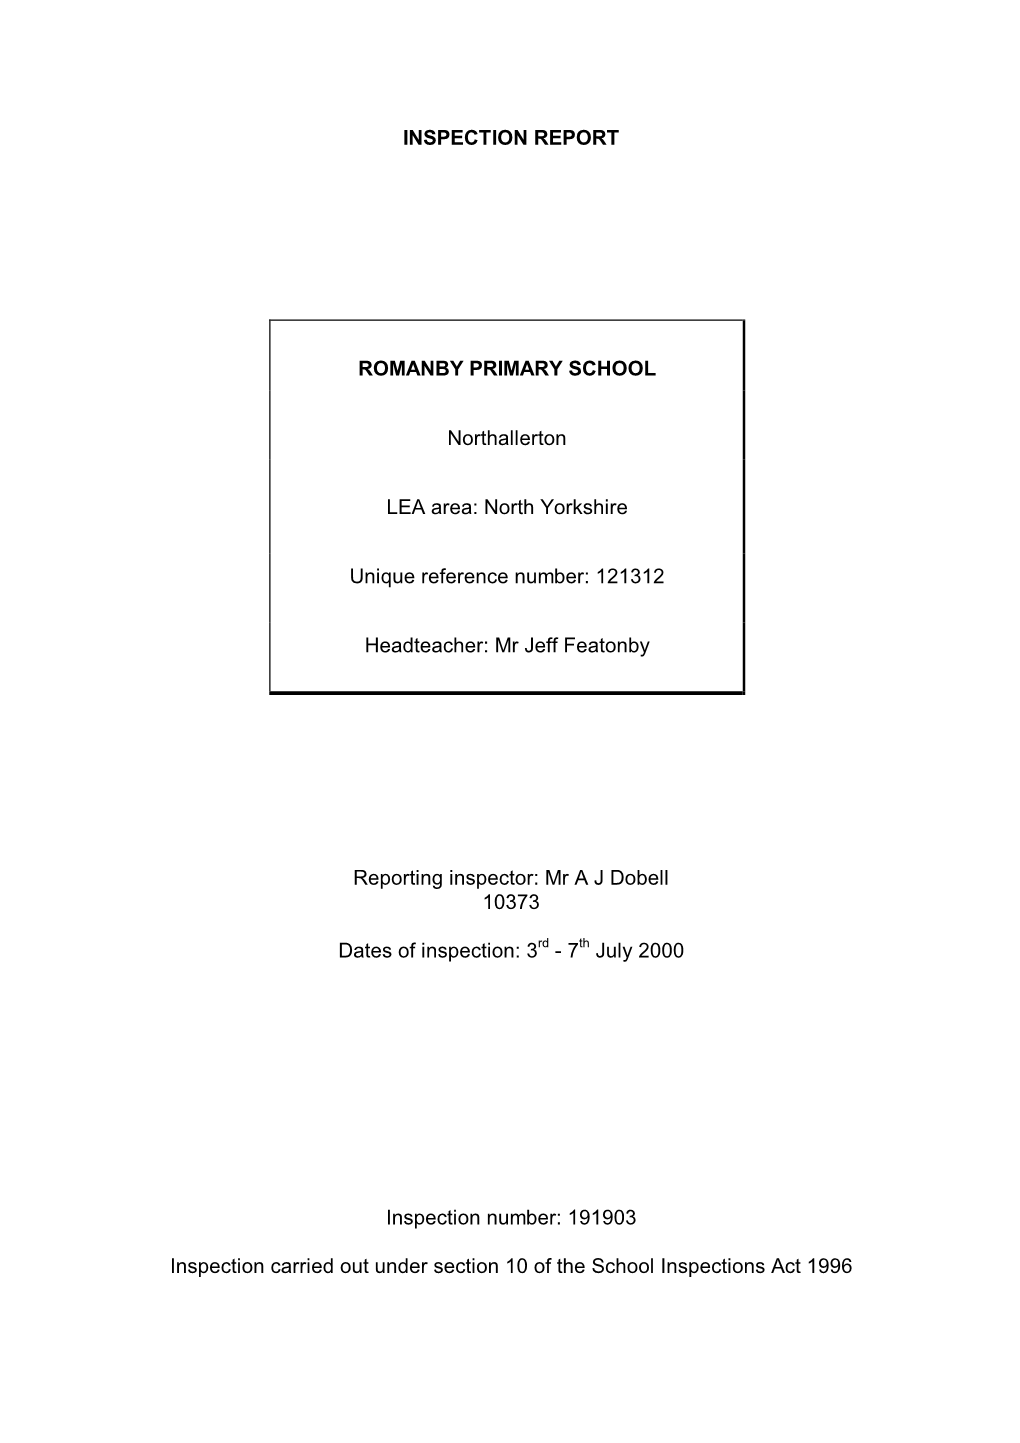 INSPECTION REPORT ROMANBY PRIMARY SCHOOL Northallerton